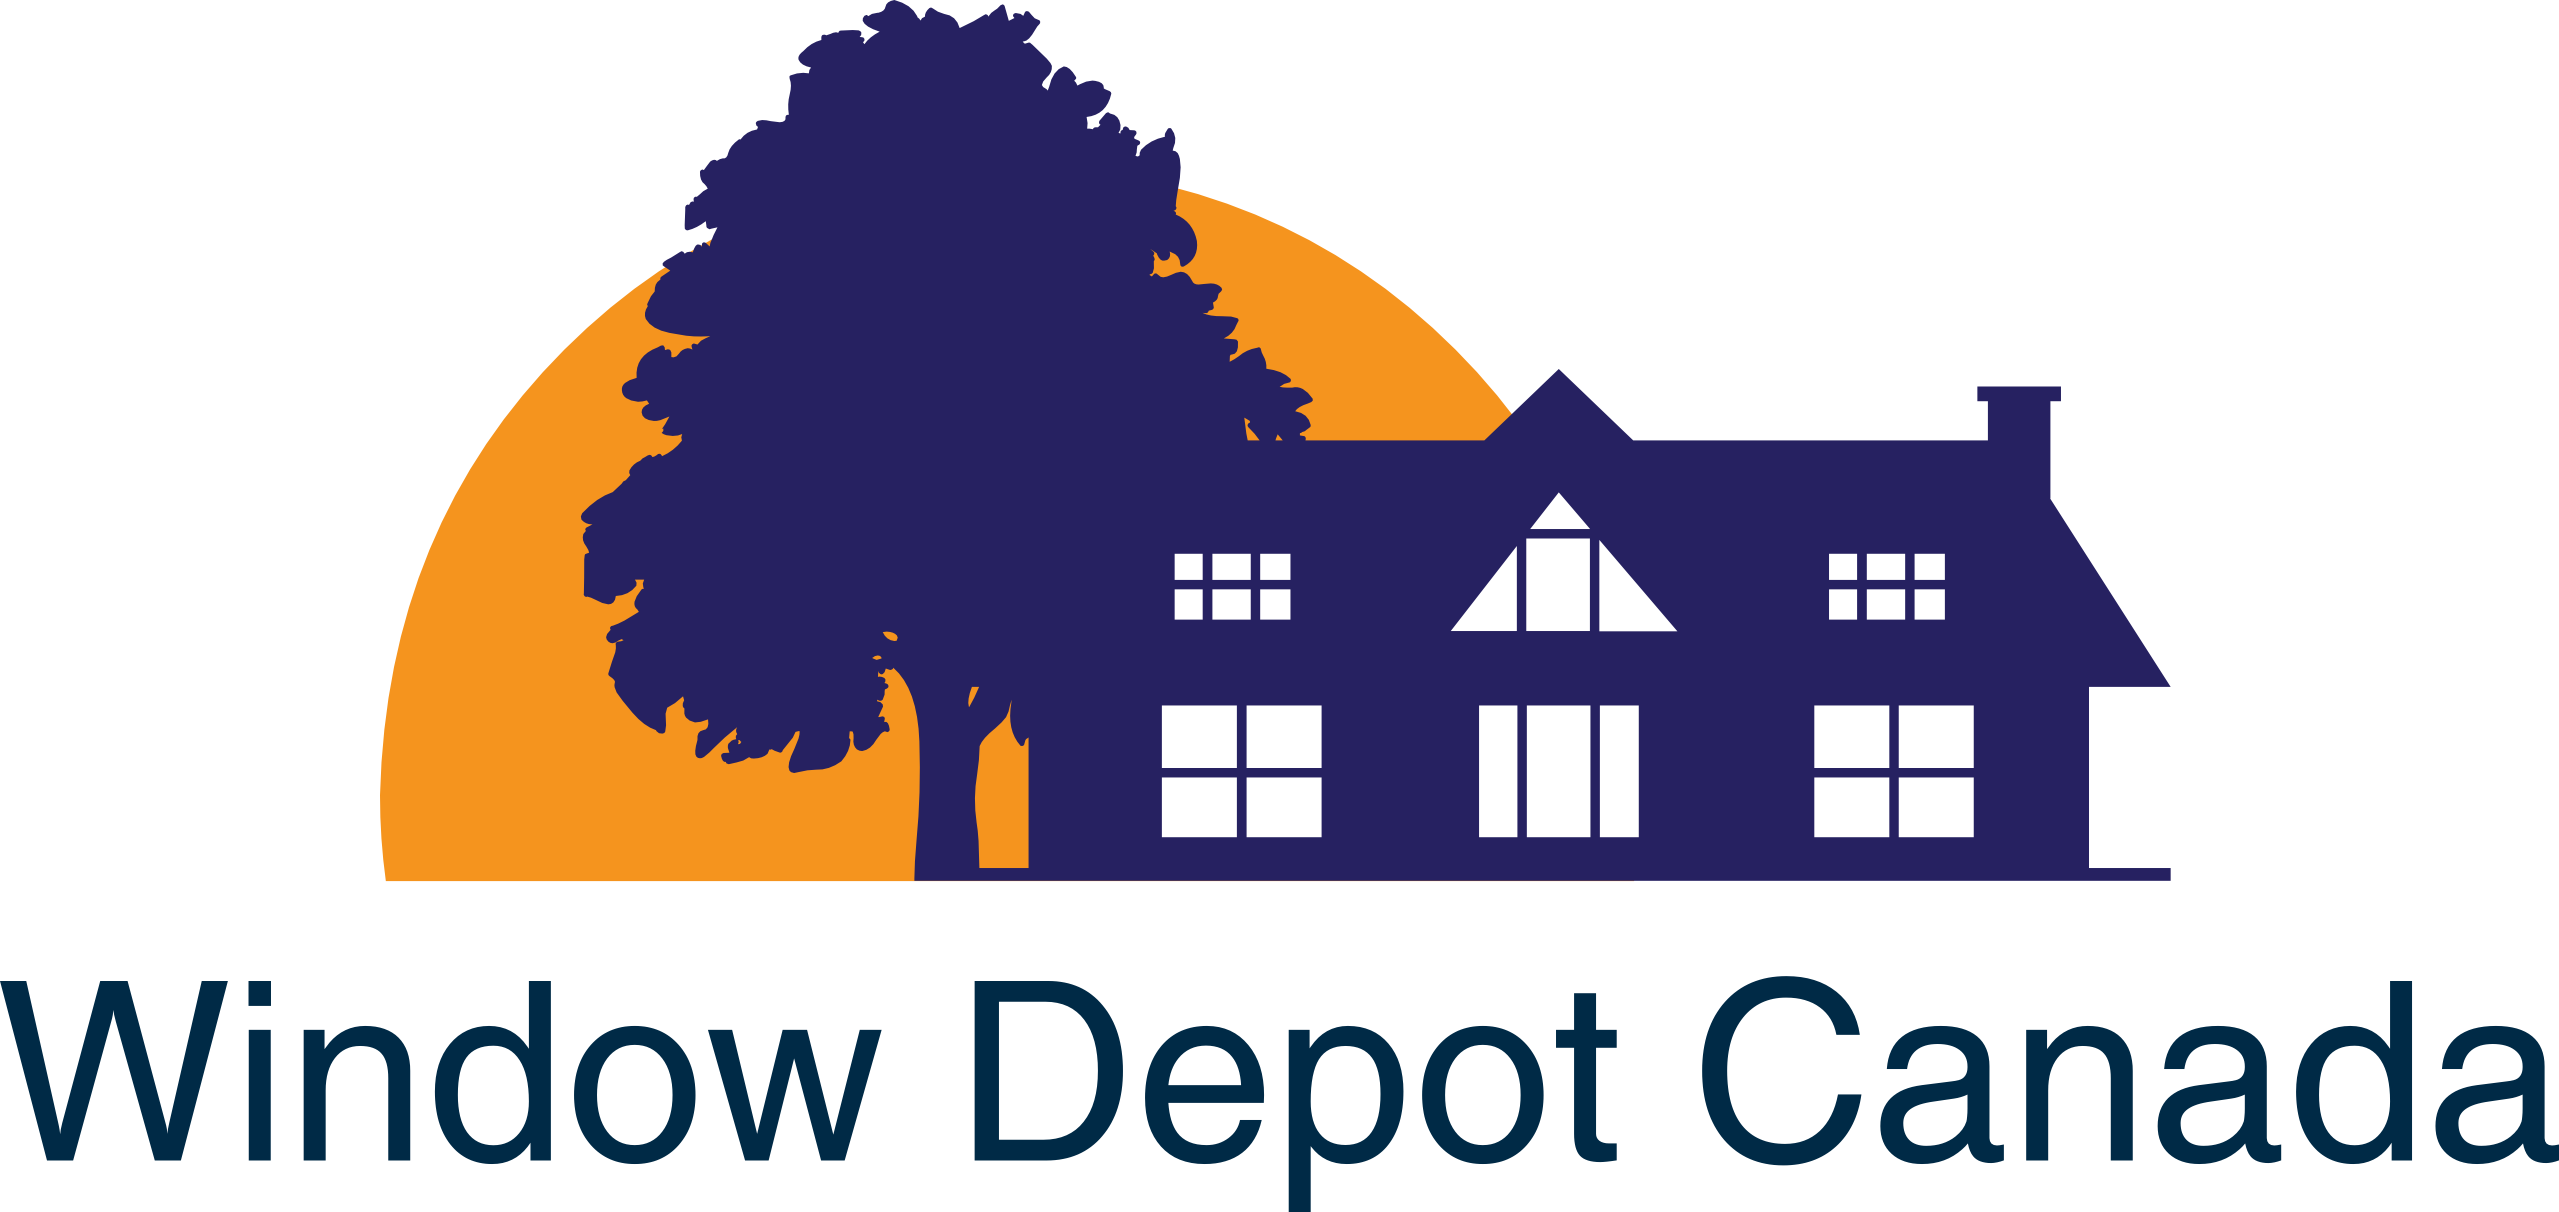 Window Depot Canada's logo